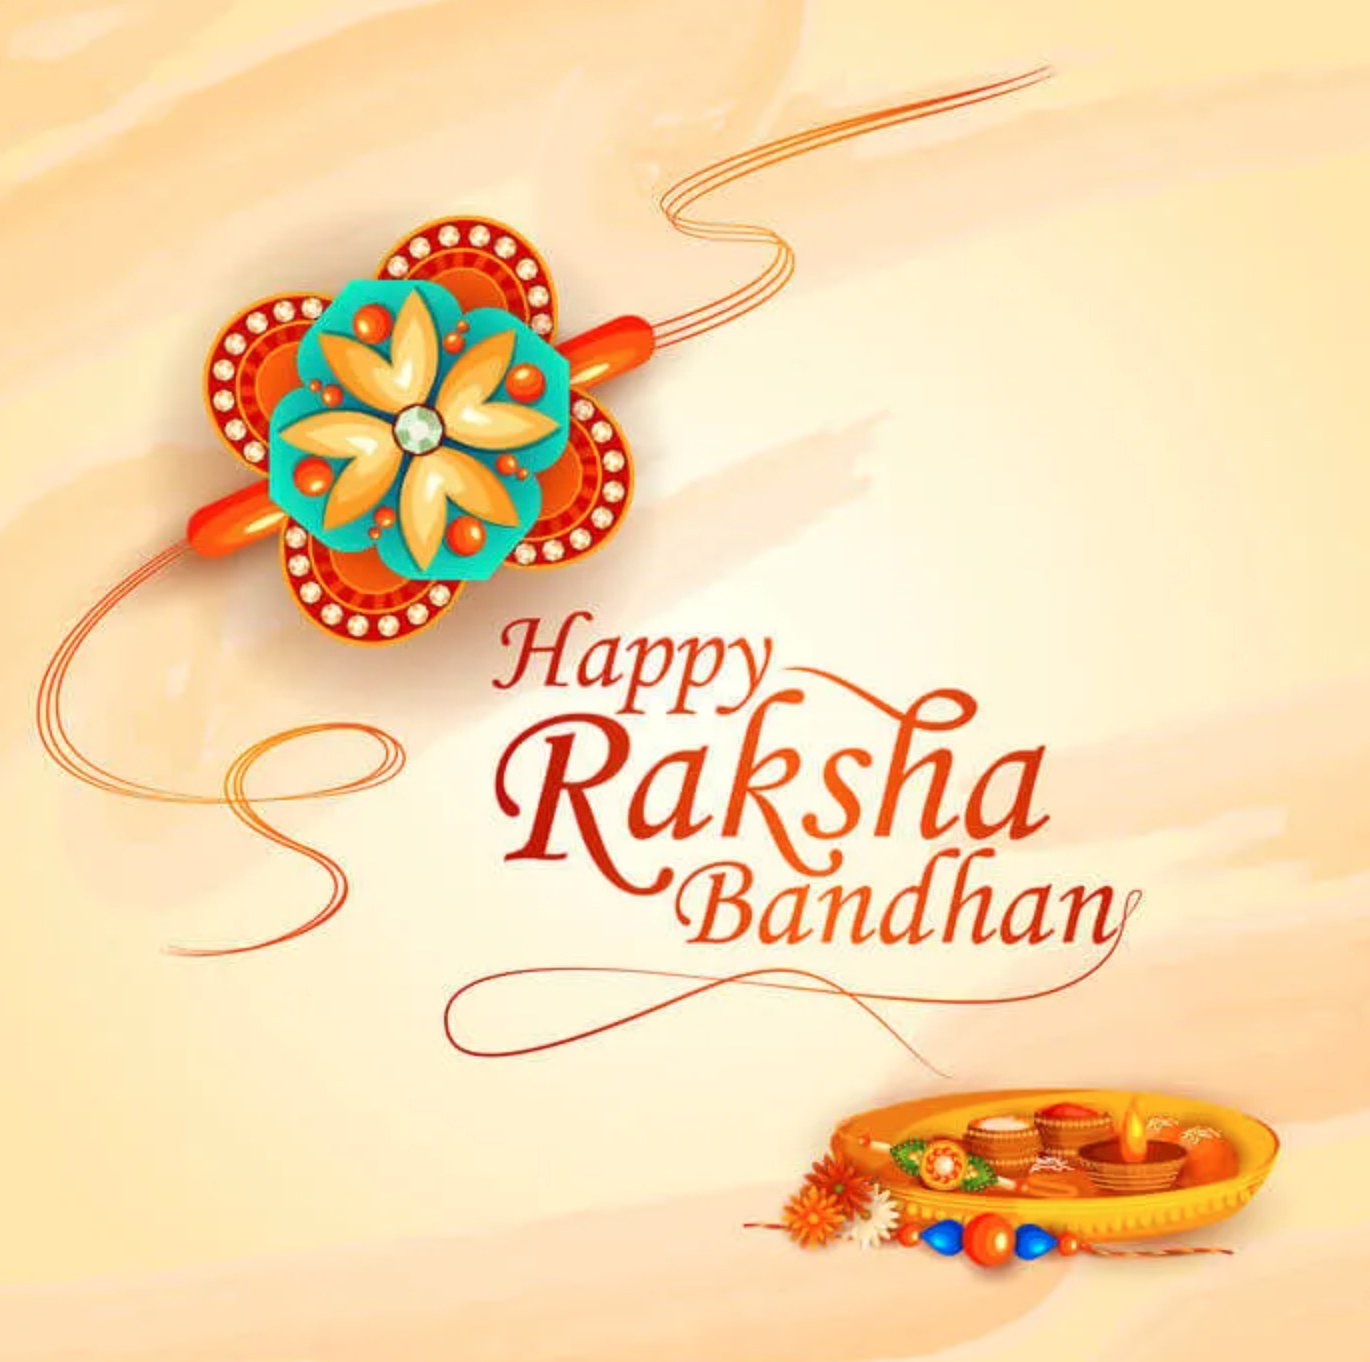 75+ Happy Raksha Bandhan 2022 Images, Wishes & Quotes! - Techlogitic